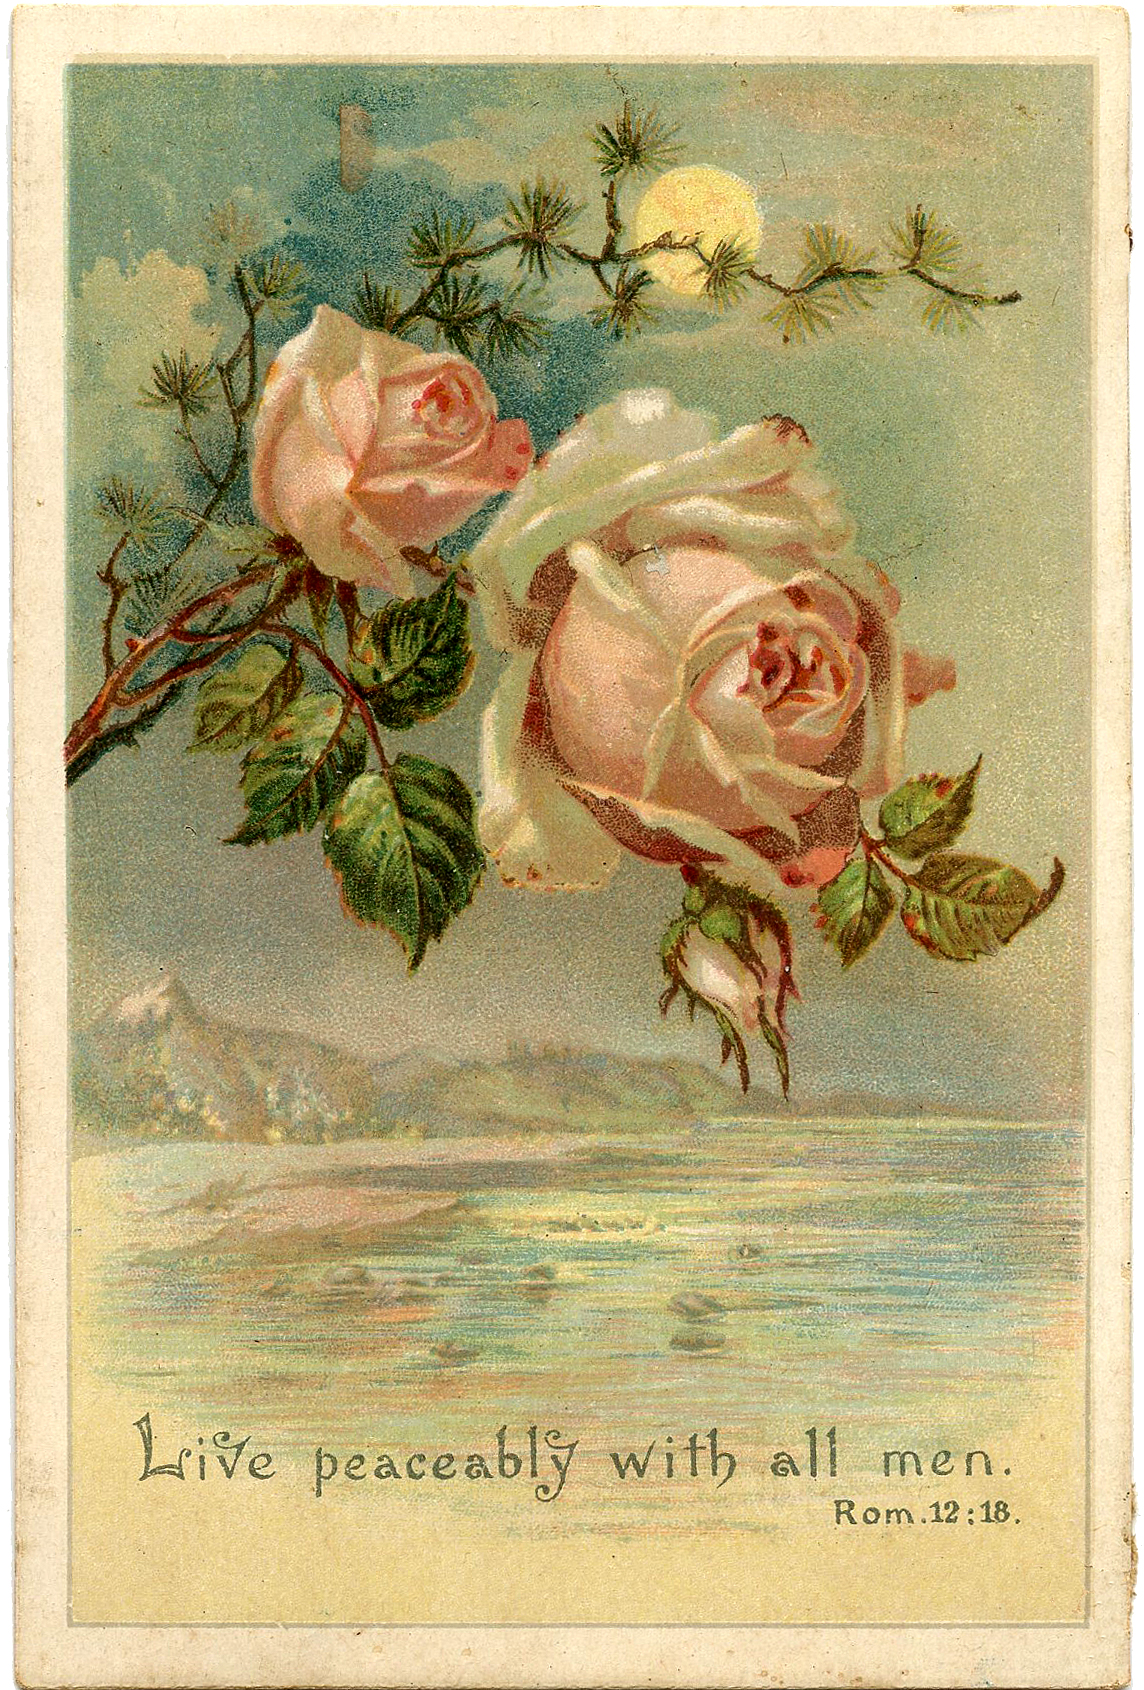 New GoRGeOuS RoSe n florals vintage roses rose clusters  Digital Graphic Design Elements single collage sheet png file